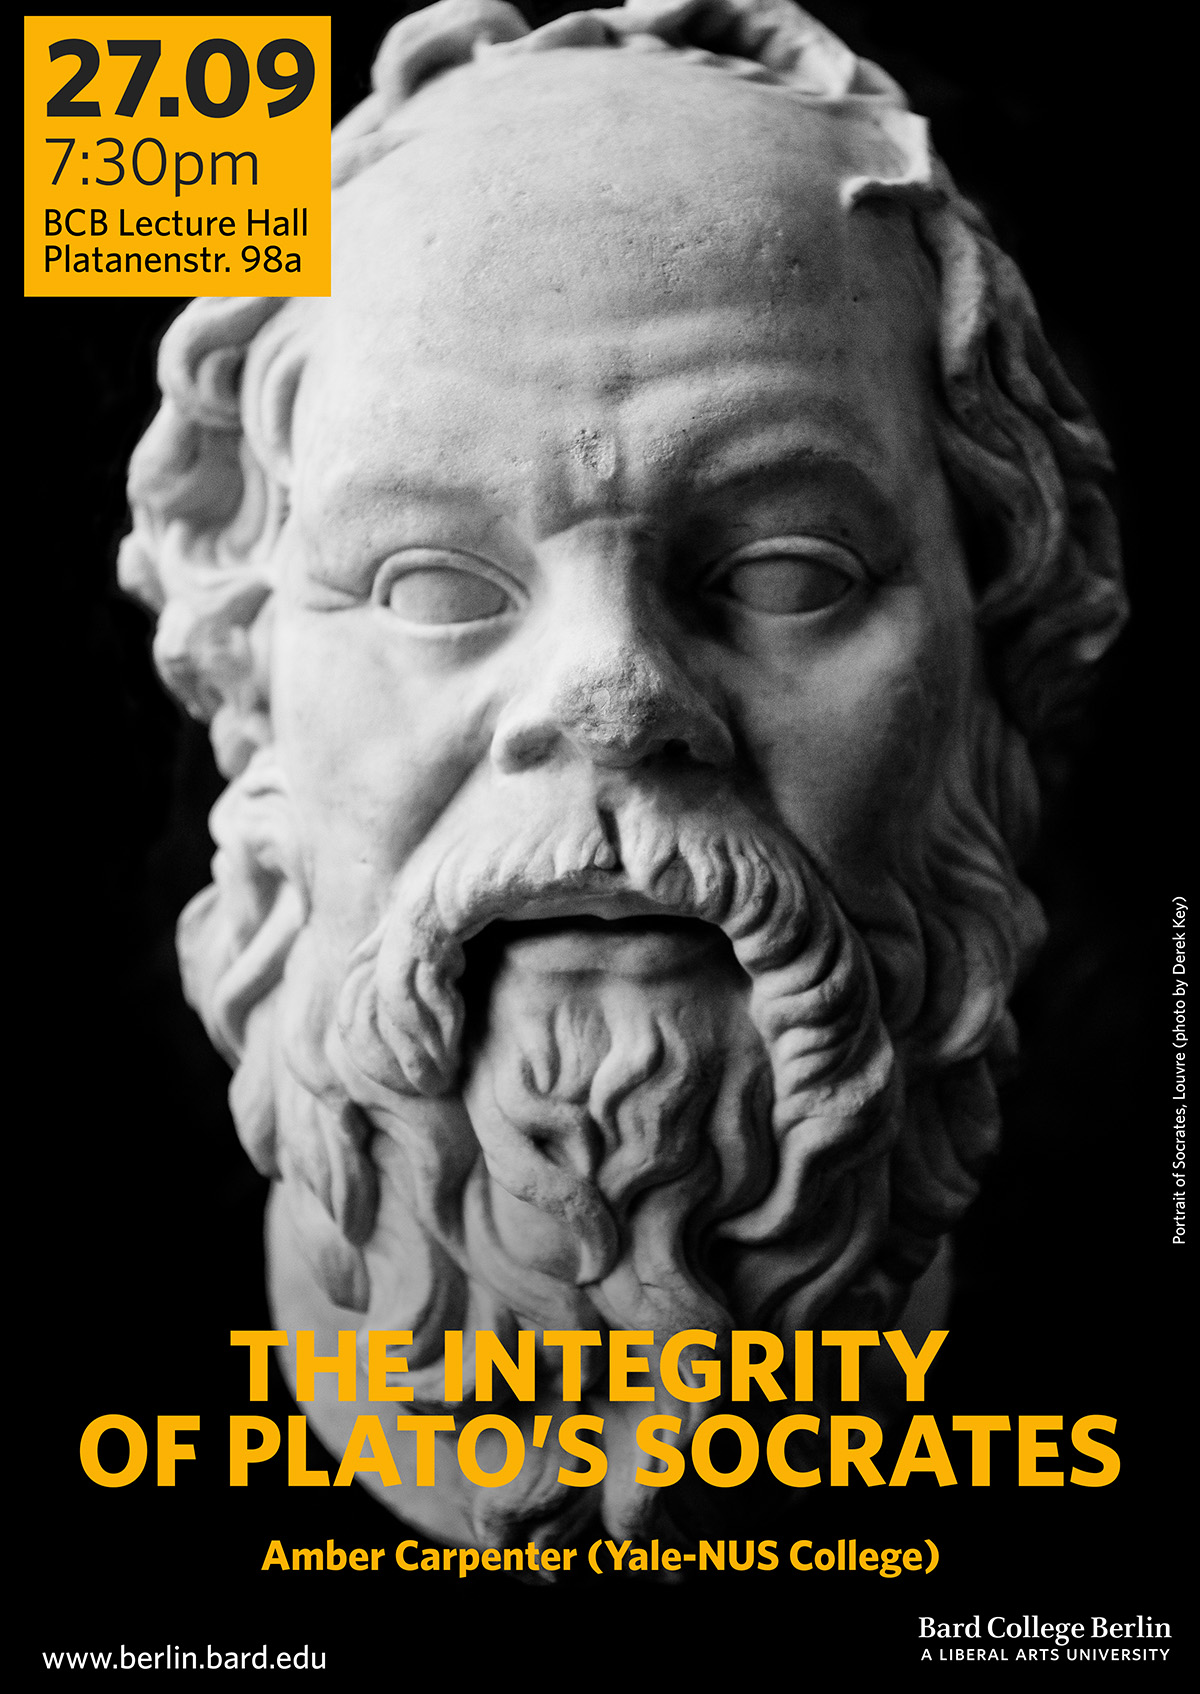 Amber Carpenter - &quot;The Integrity of Plato&rsquo;s Socrates&quot;